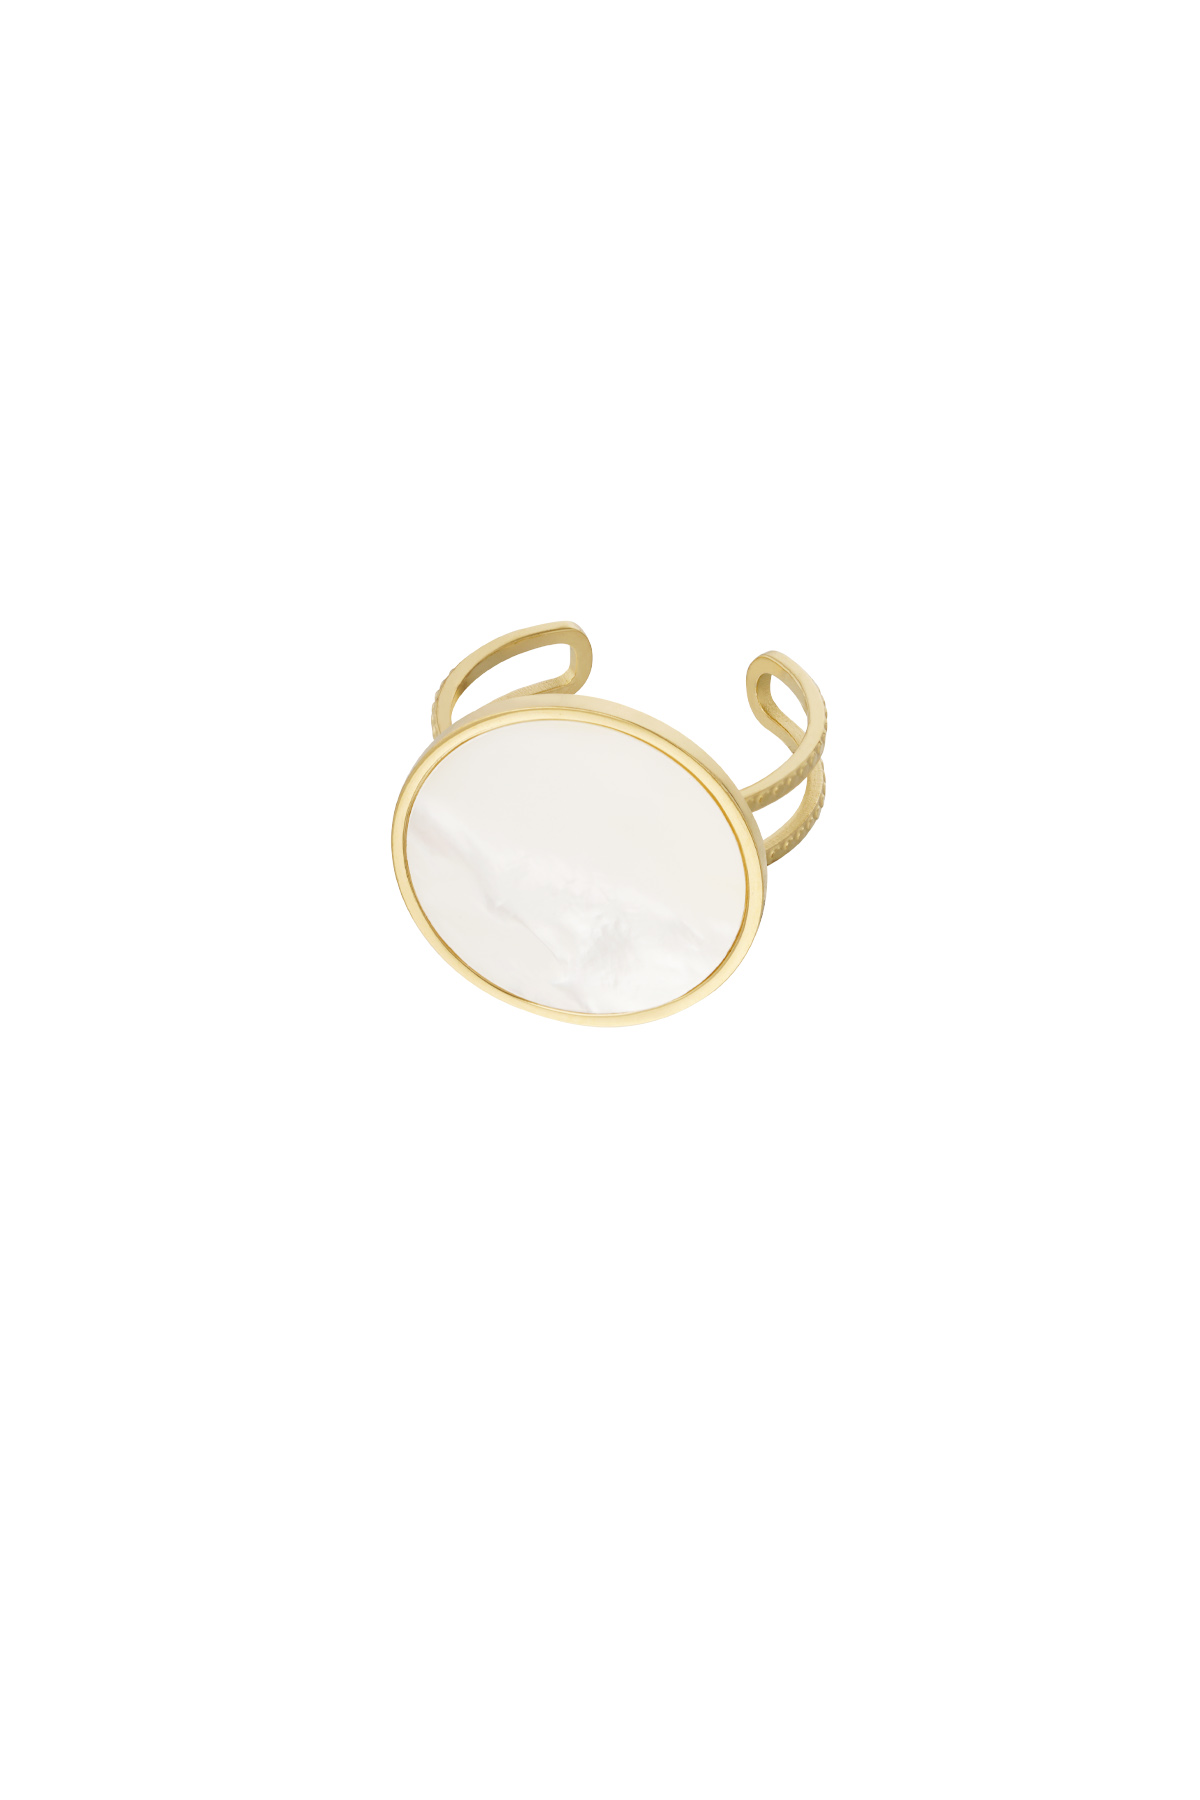 Ring modern - gold/white